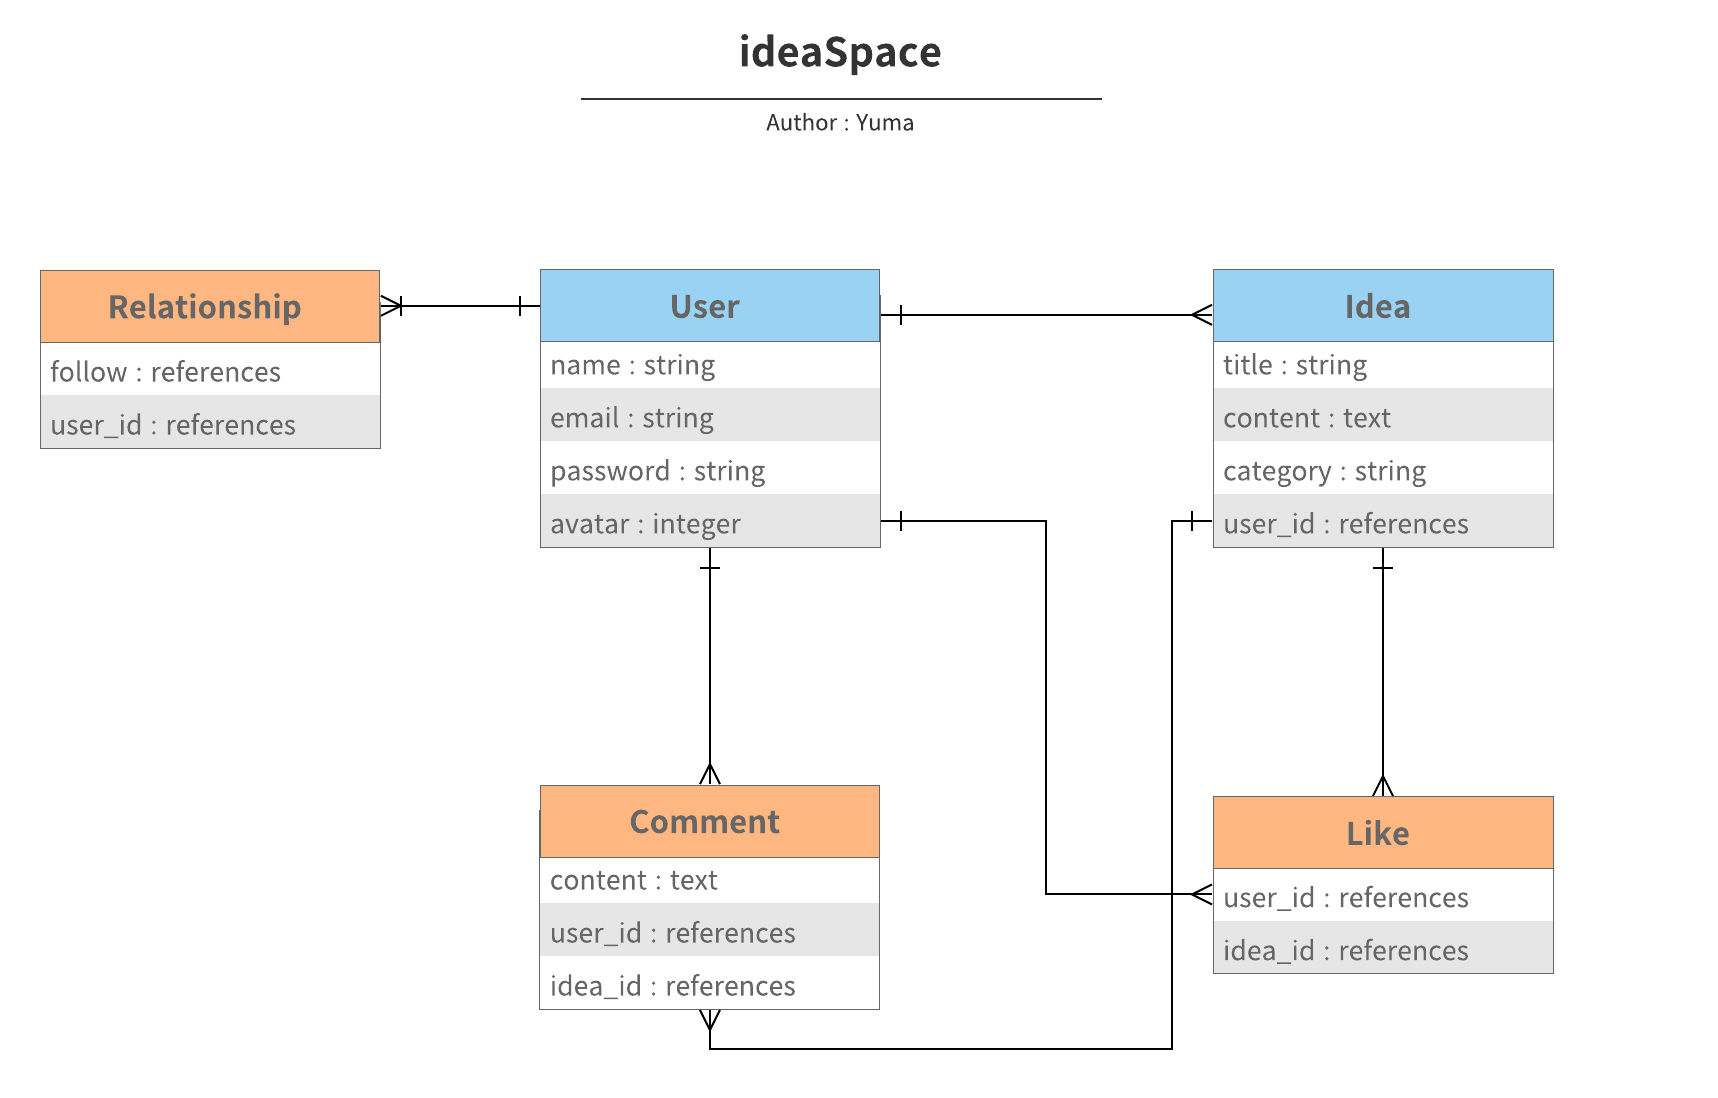 ideaspace-er.png